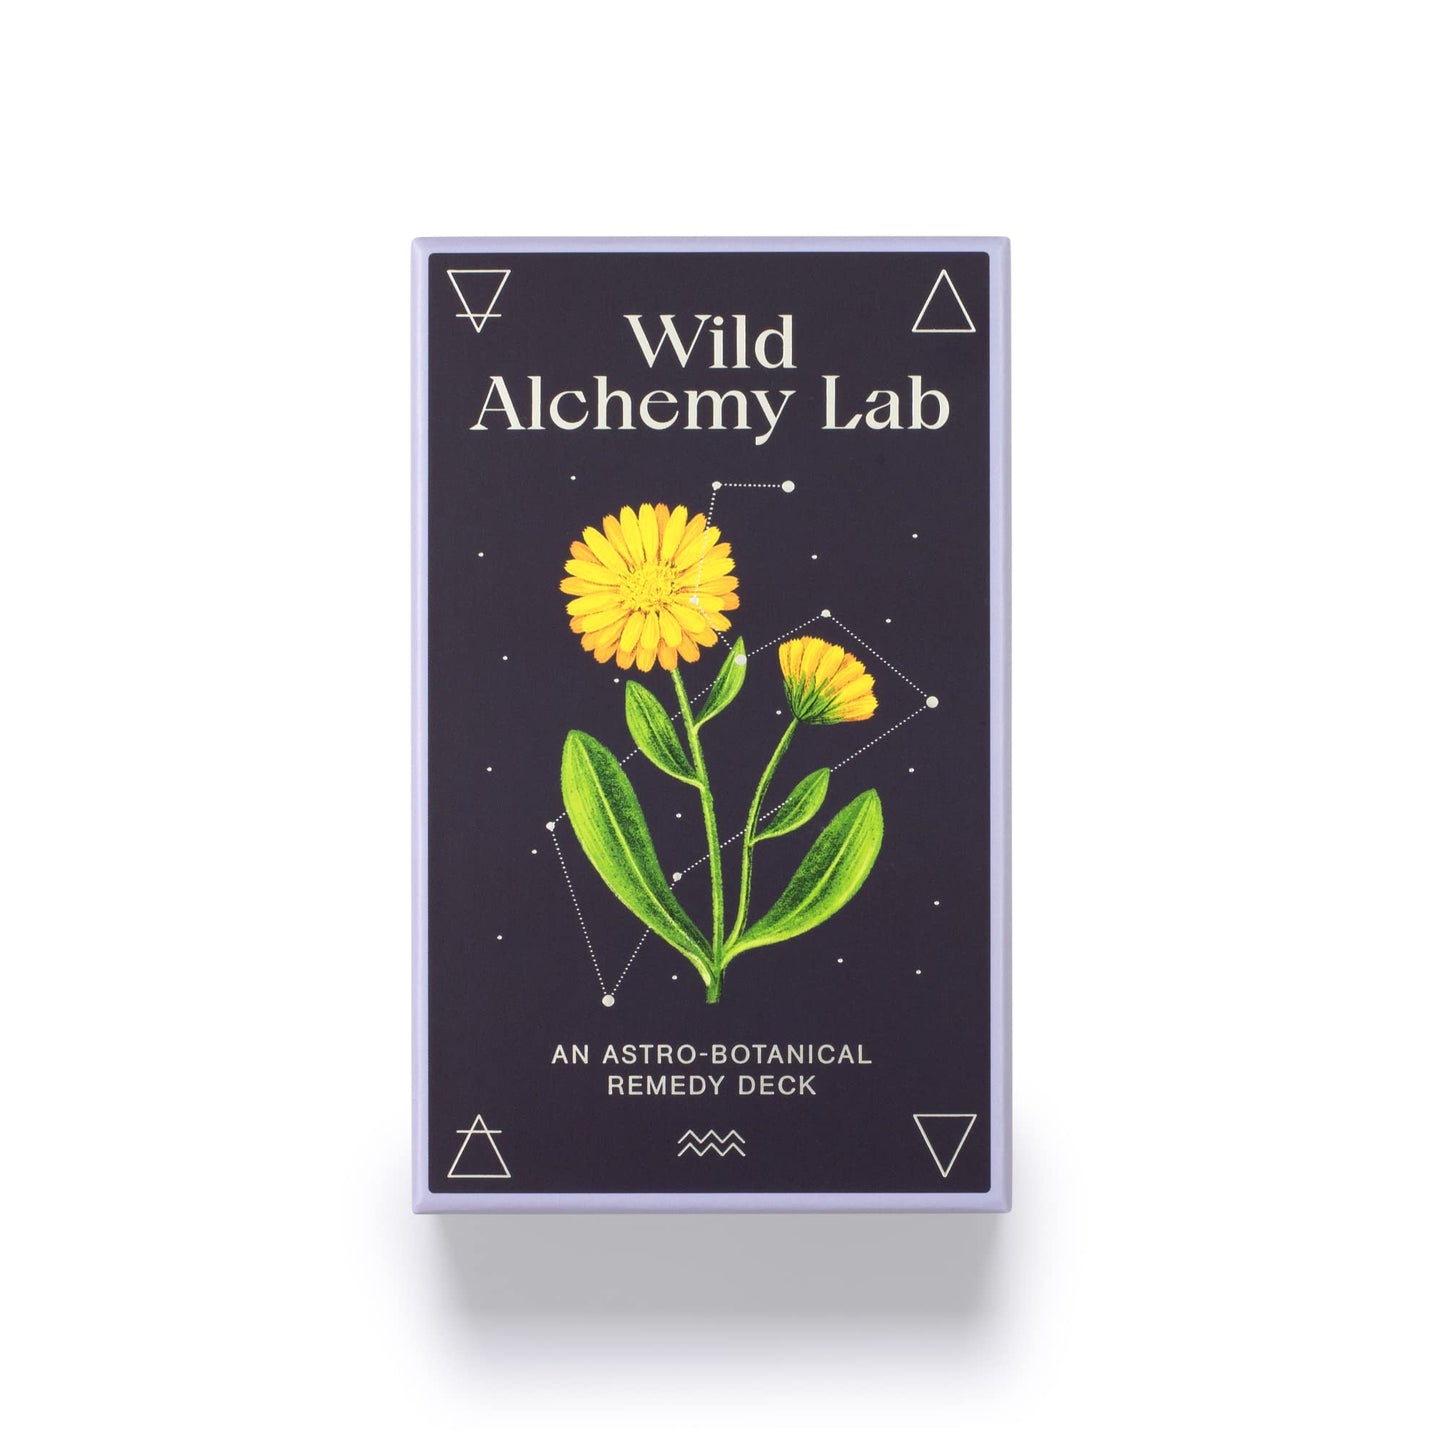 Wild Alchemy Lab: An Astro-botanical Remedy Deck